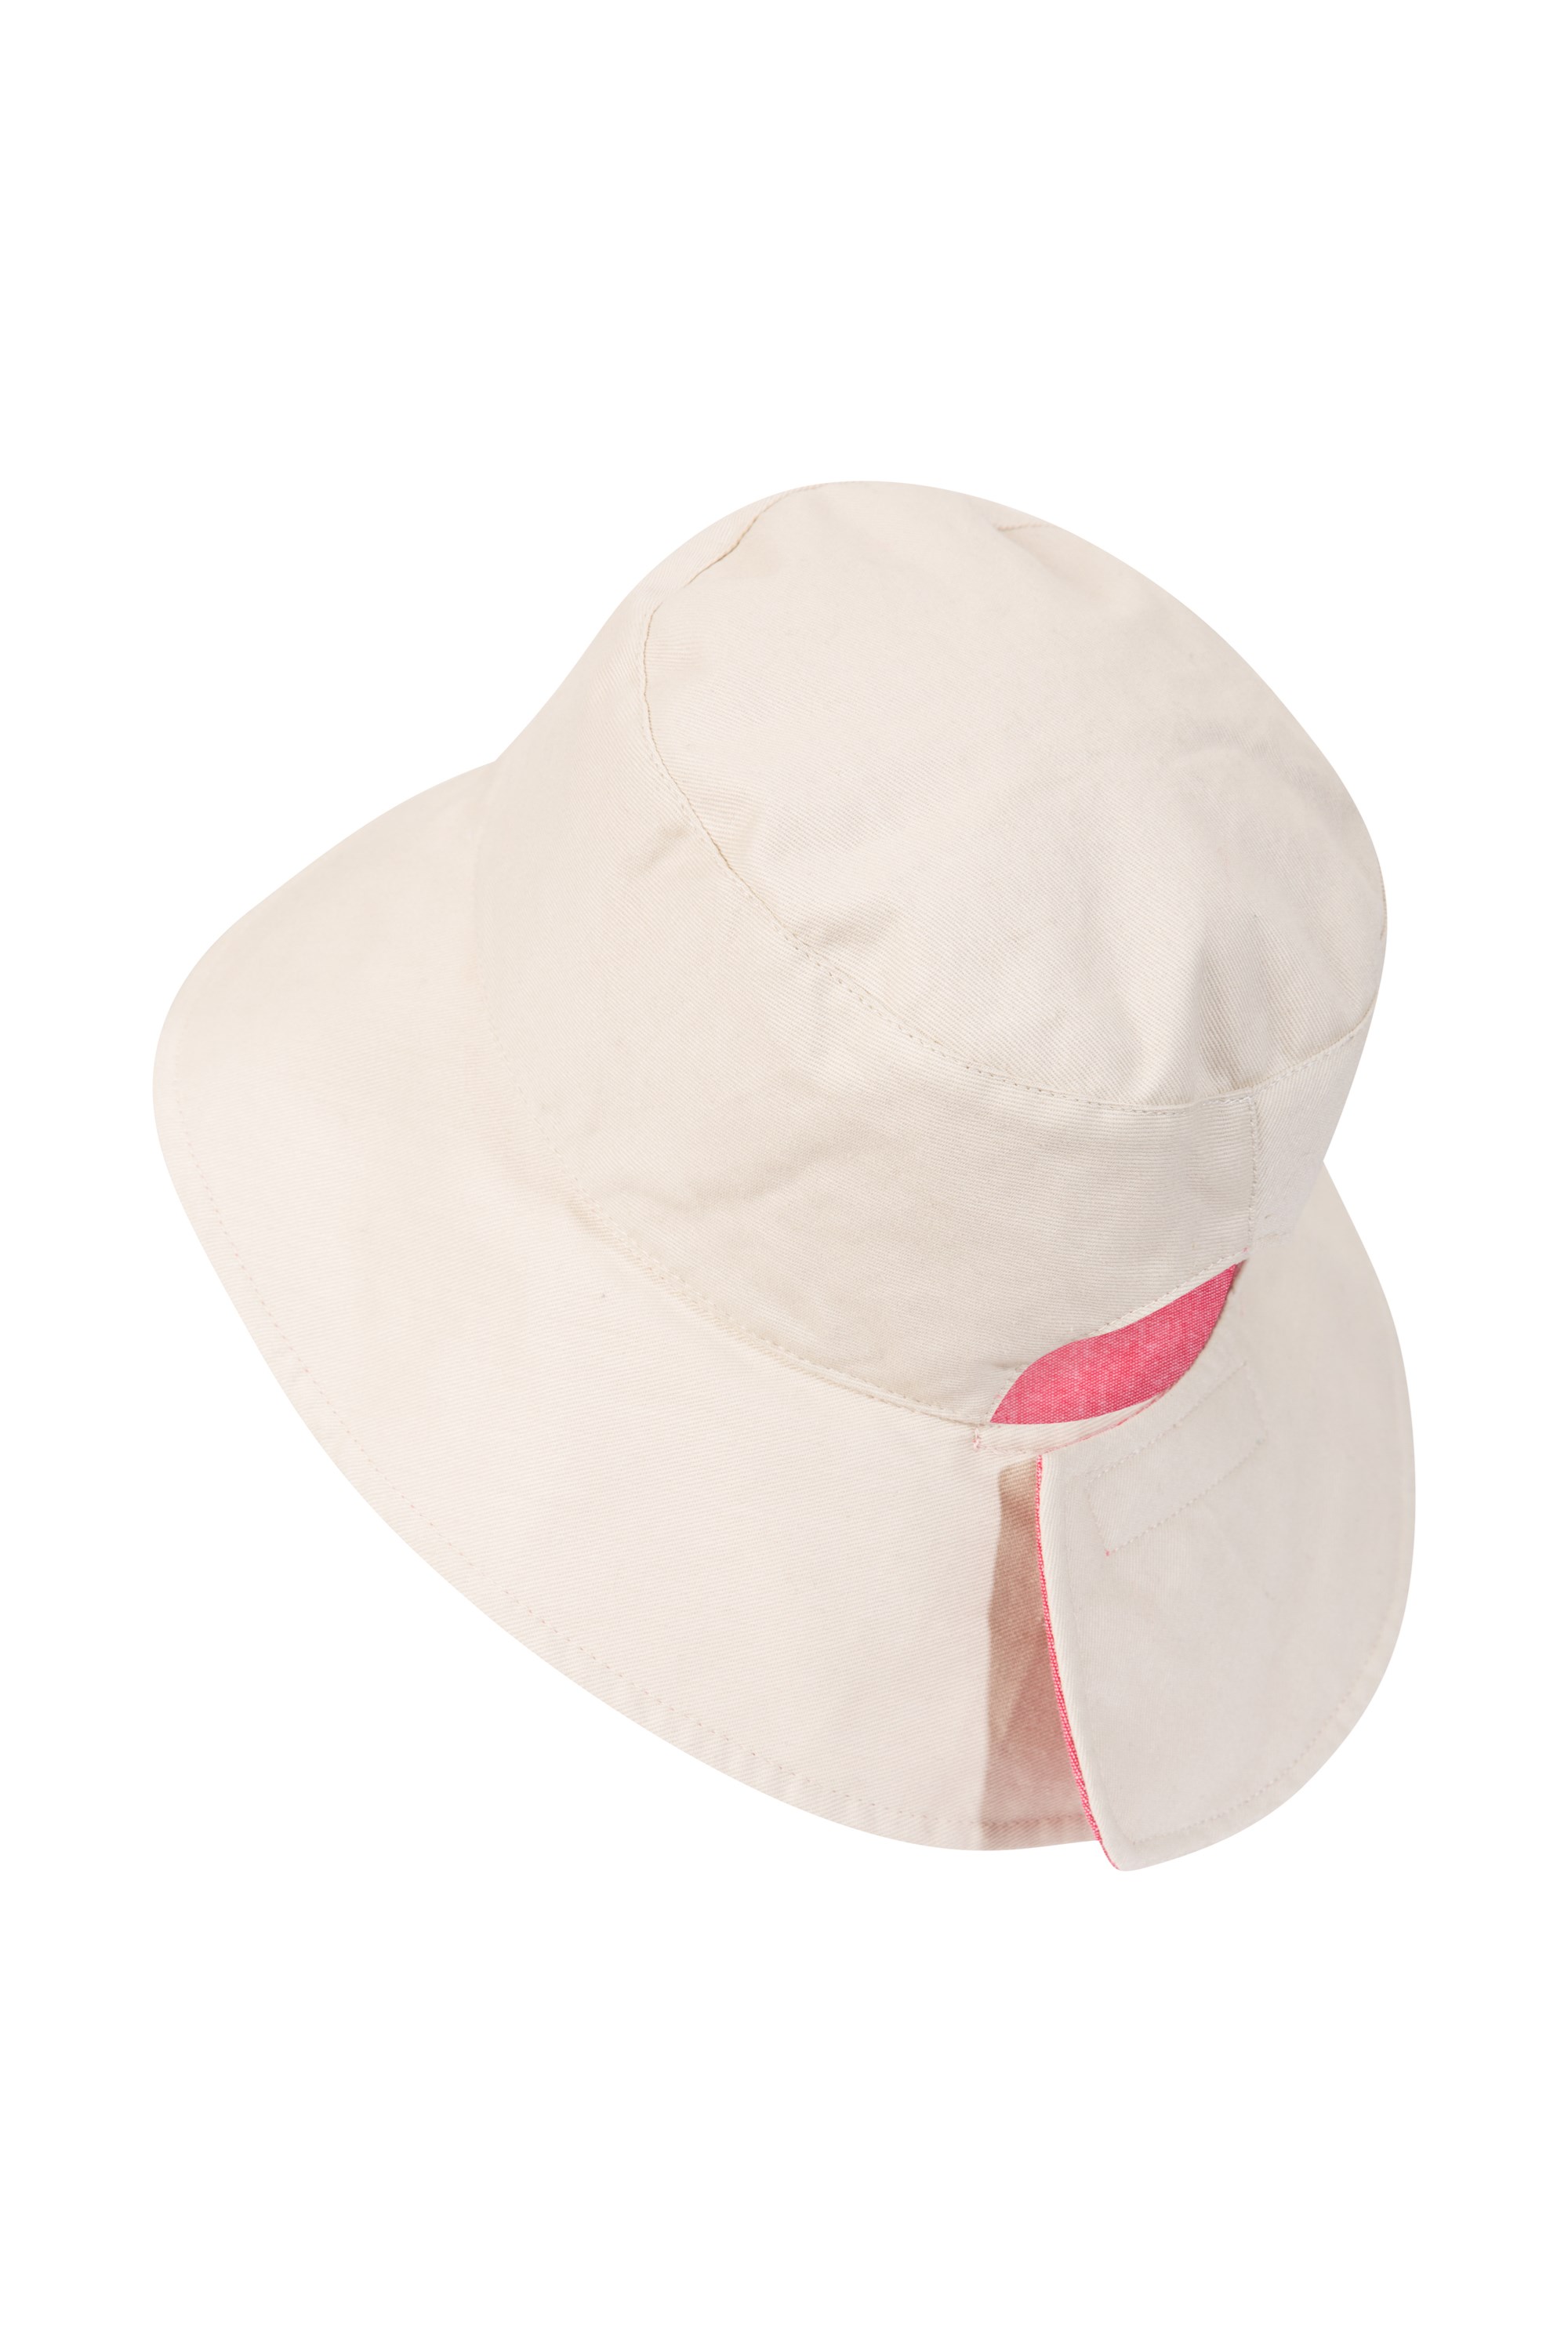 Reversible Plain Womens Bucket Hat